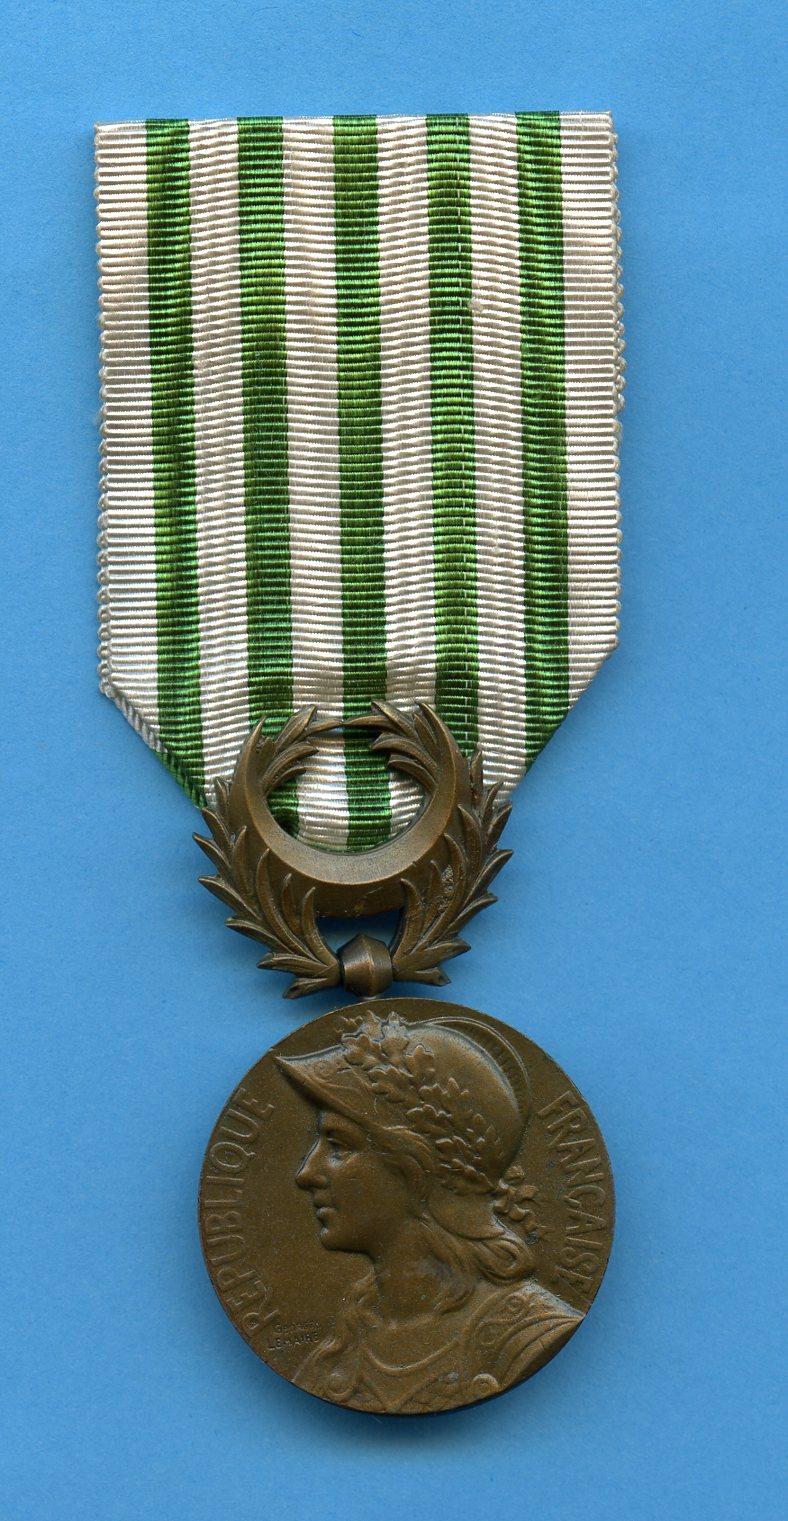 France The Dardanelles Medal 1915 (Gallipoli)